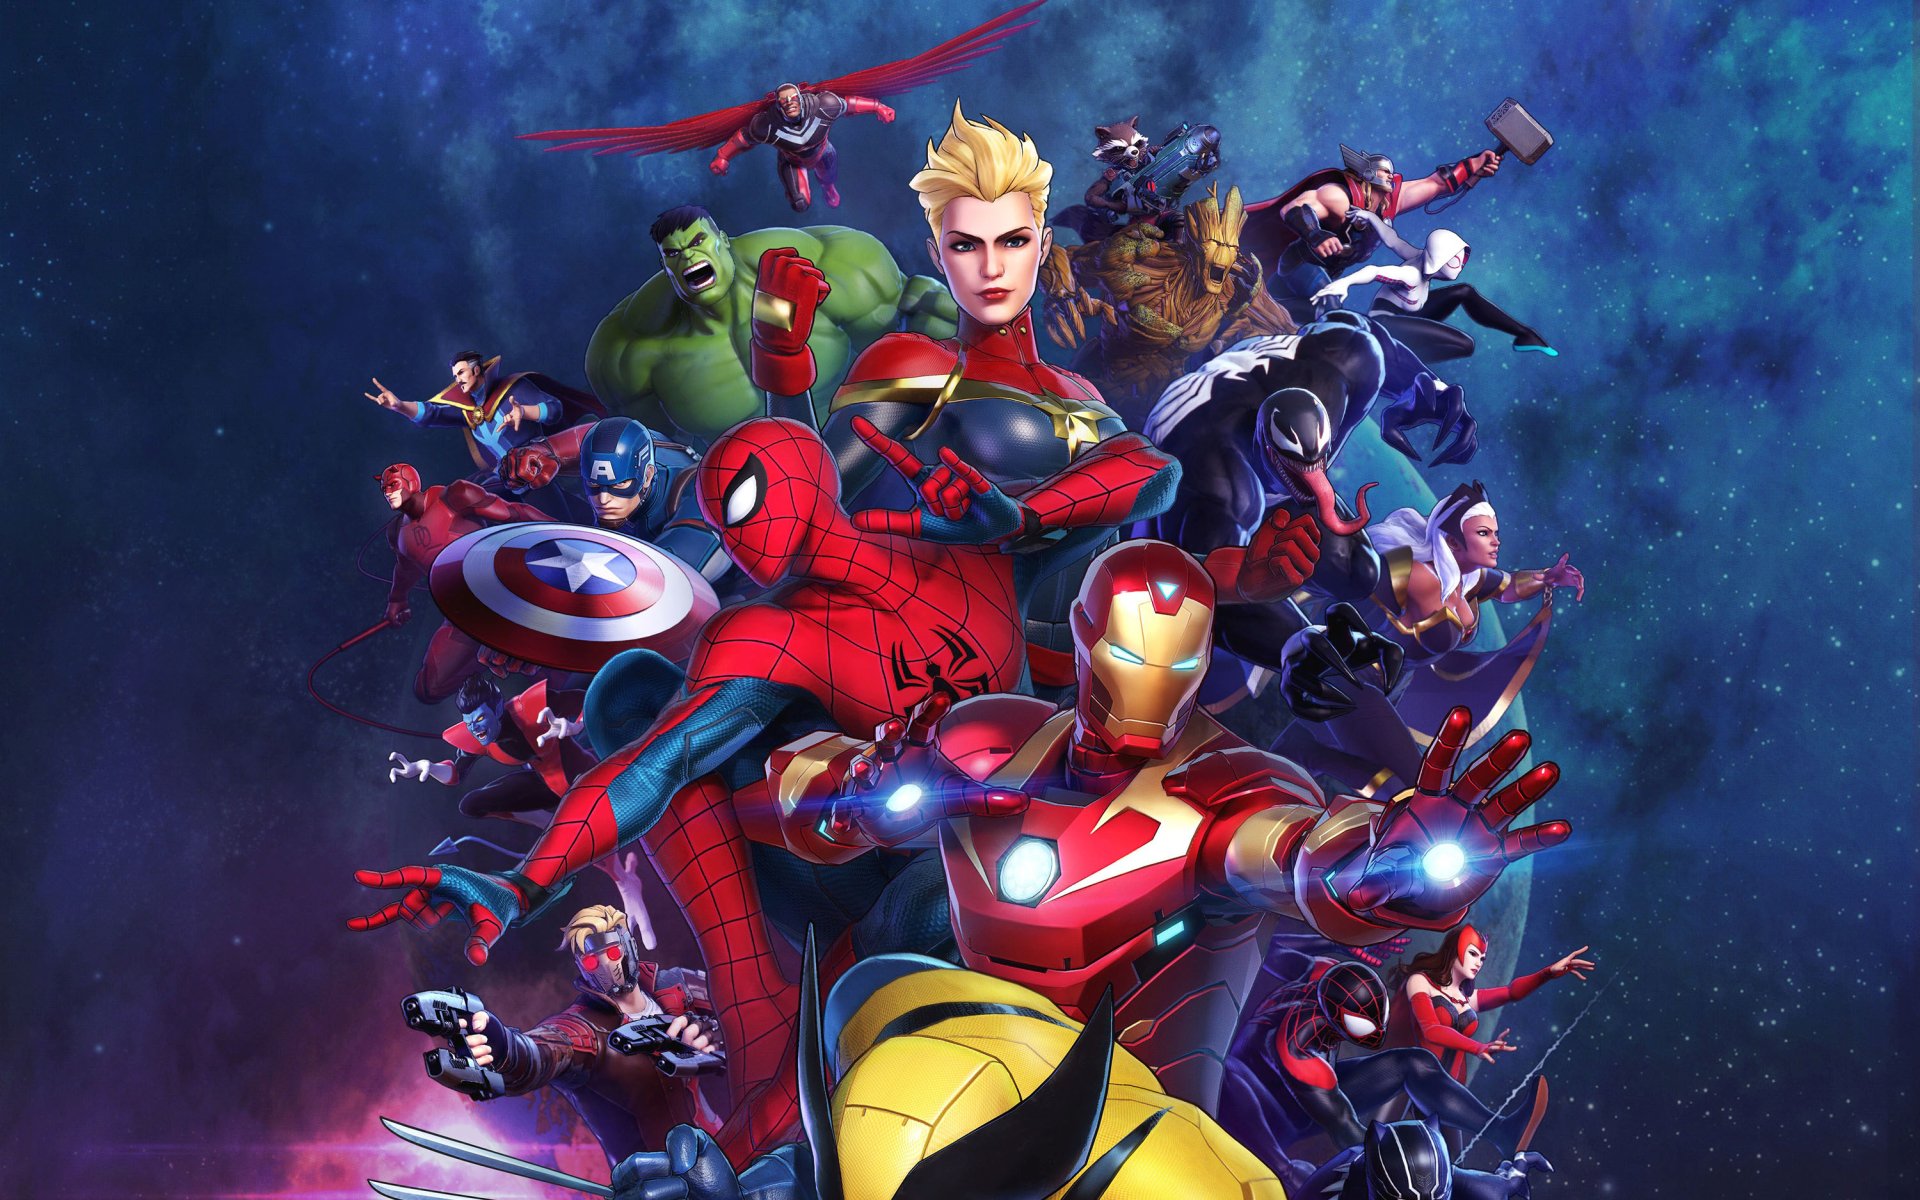 Marvel Ultimate Alliance 3: The Black Order Wallpapers